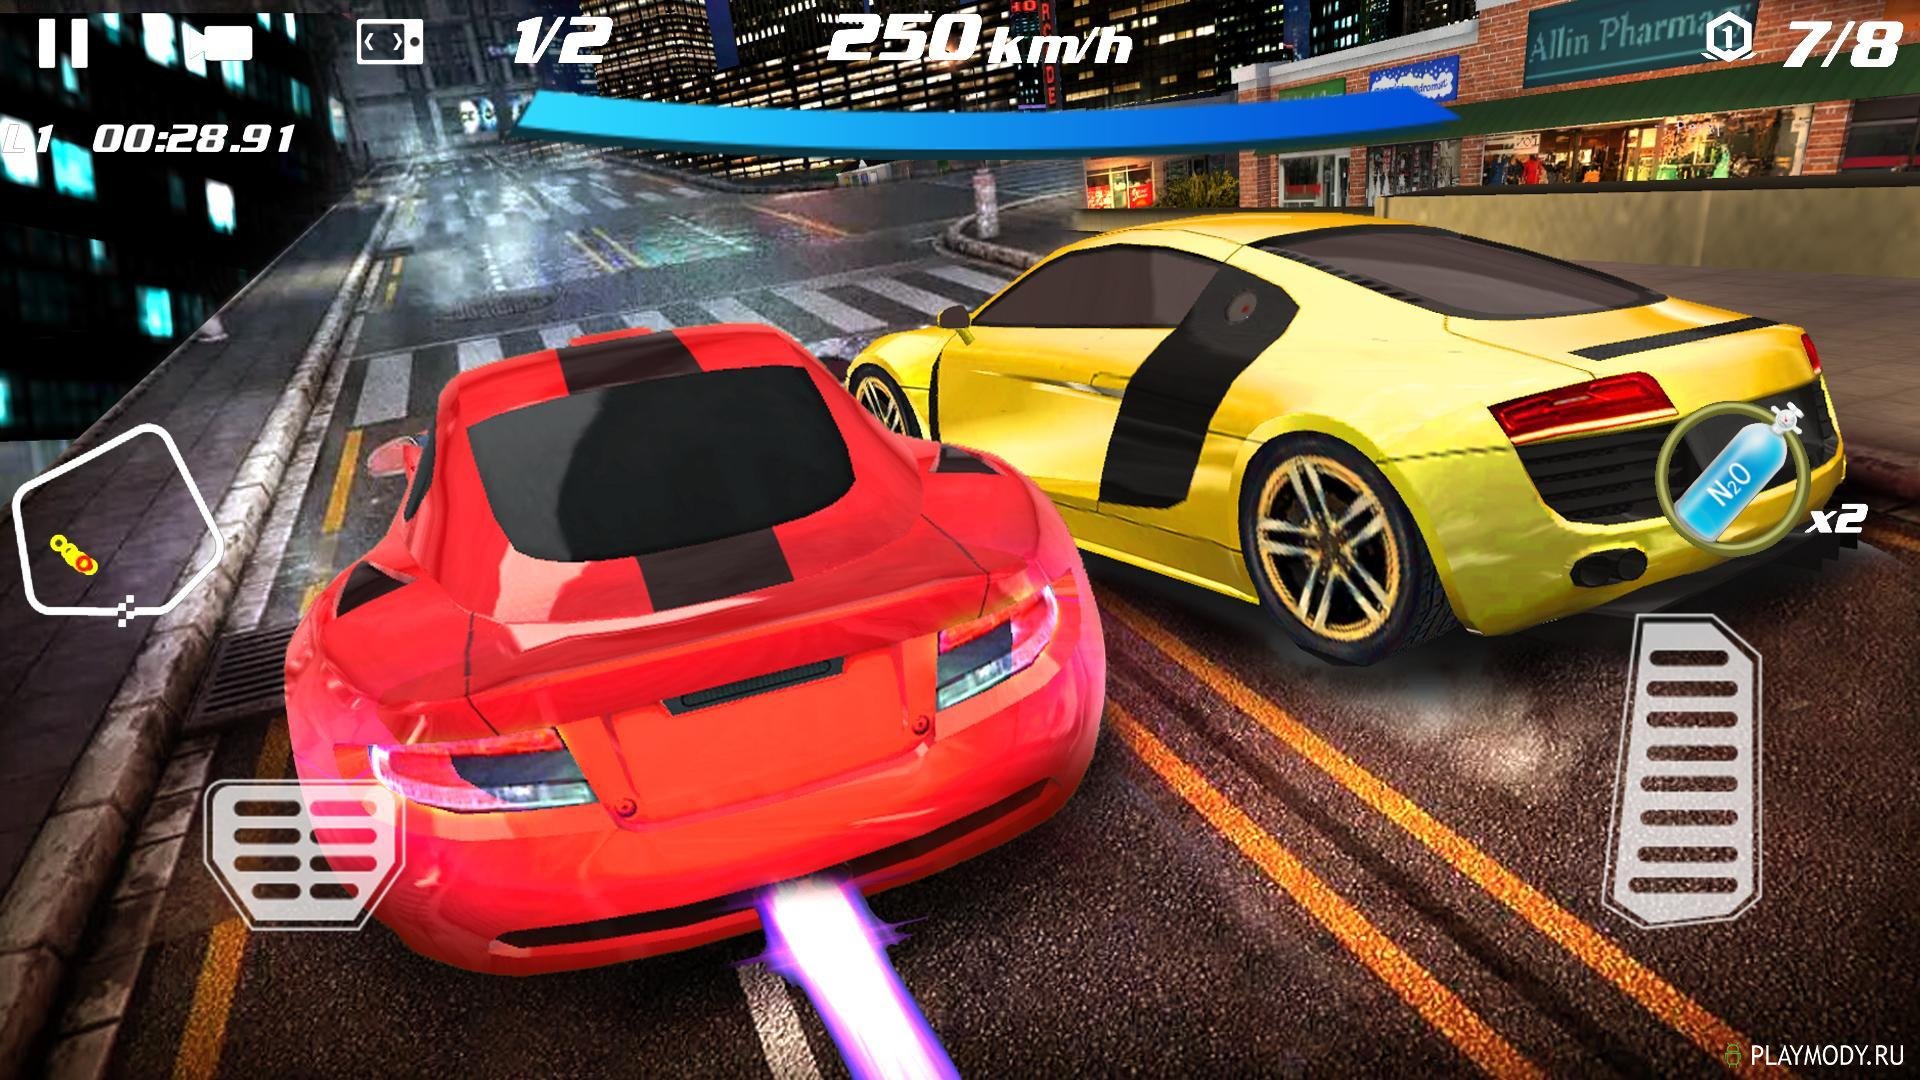 Кар икс рейсинг на андроид. Гонки 3. Street Racing игра 3. Игра гонки синяя машина. Игра про желтую гоночную машину.